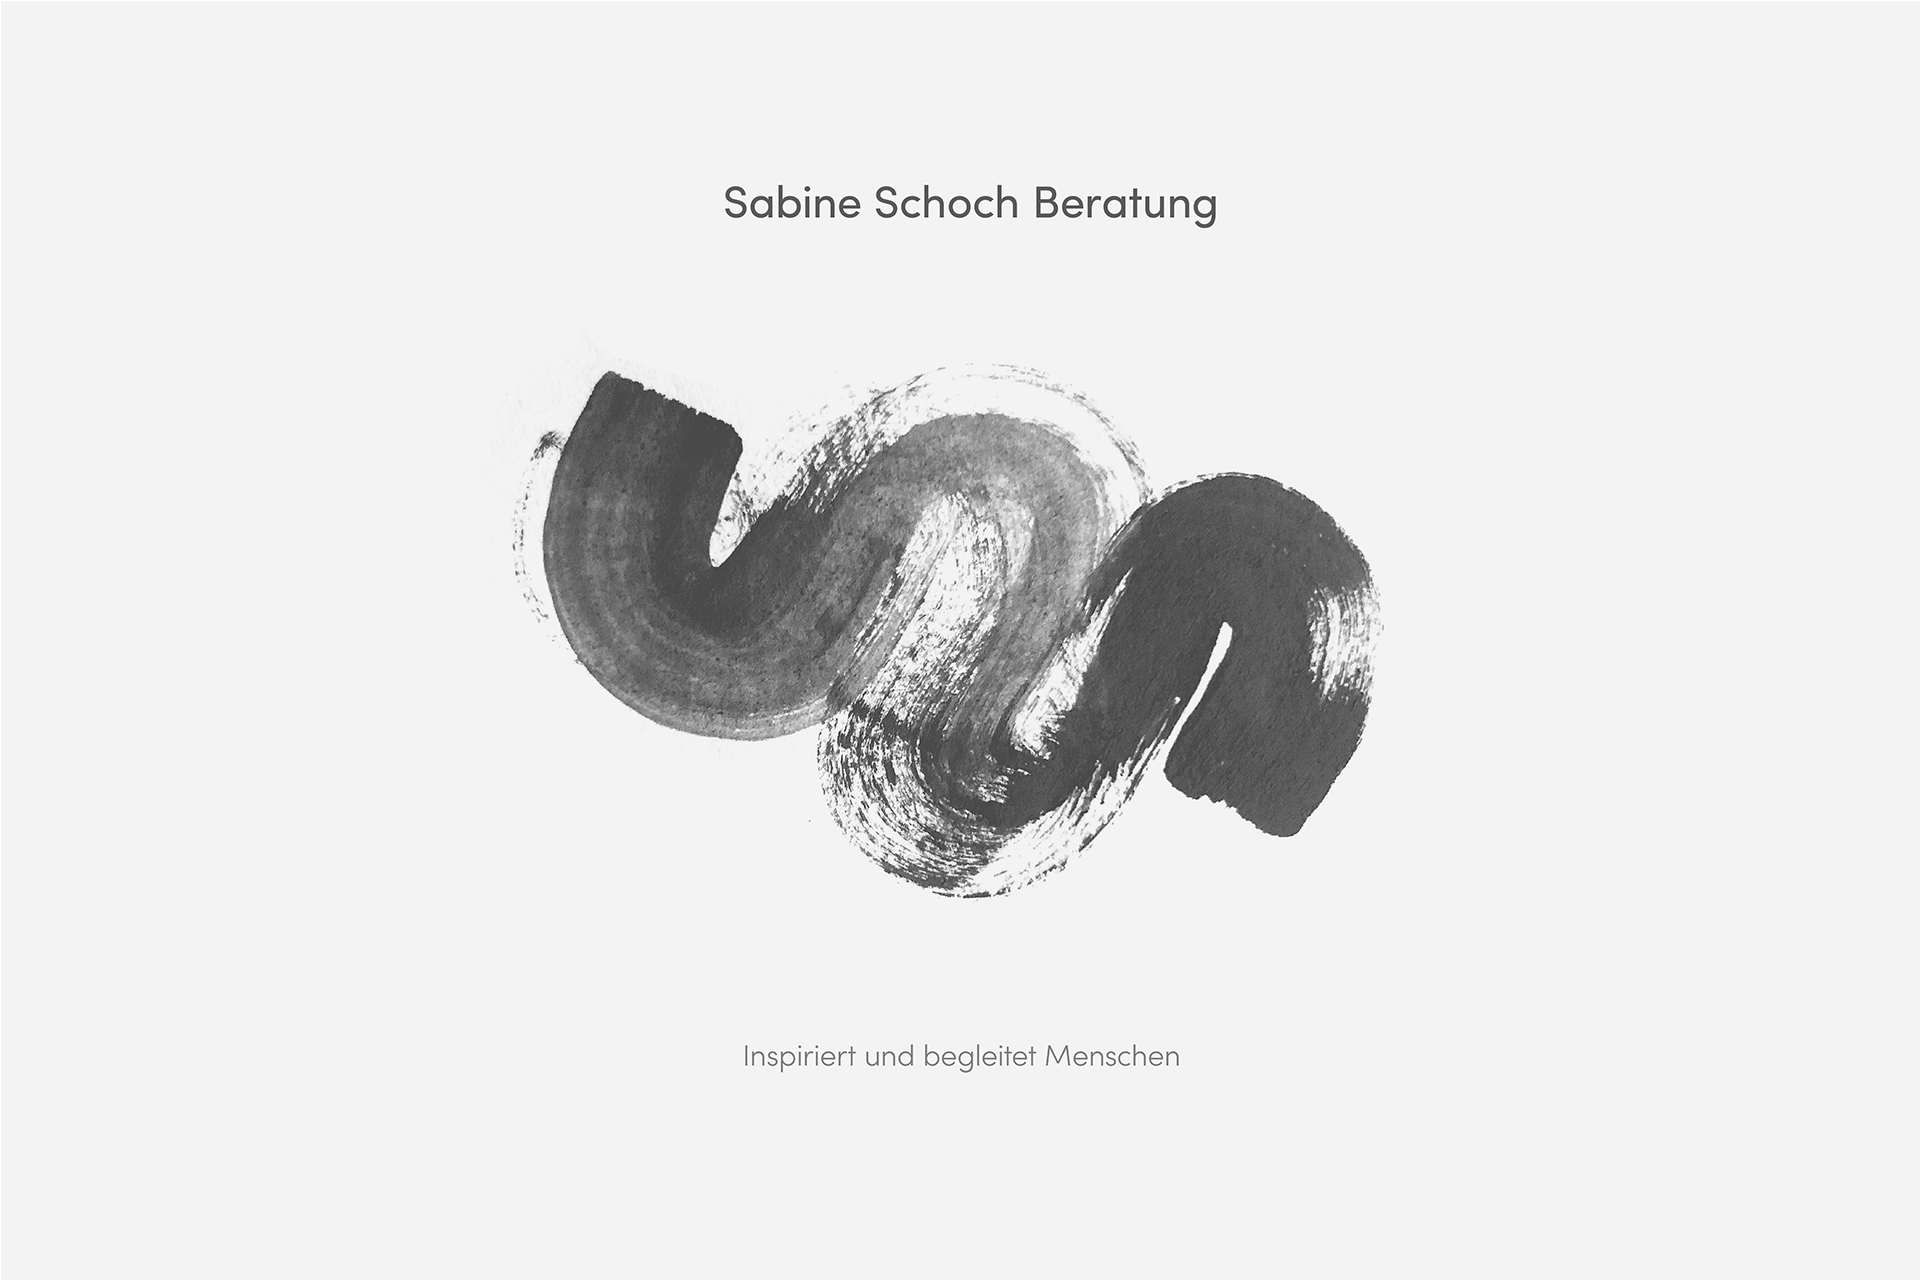 [Translate to English:] Sabine Schoch Logo